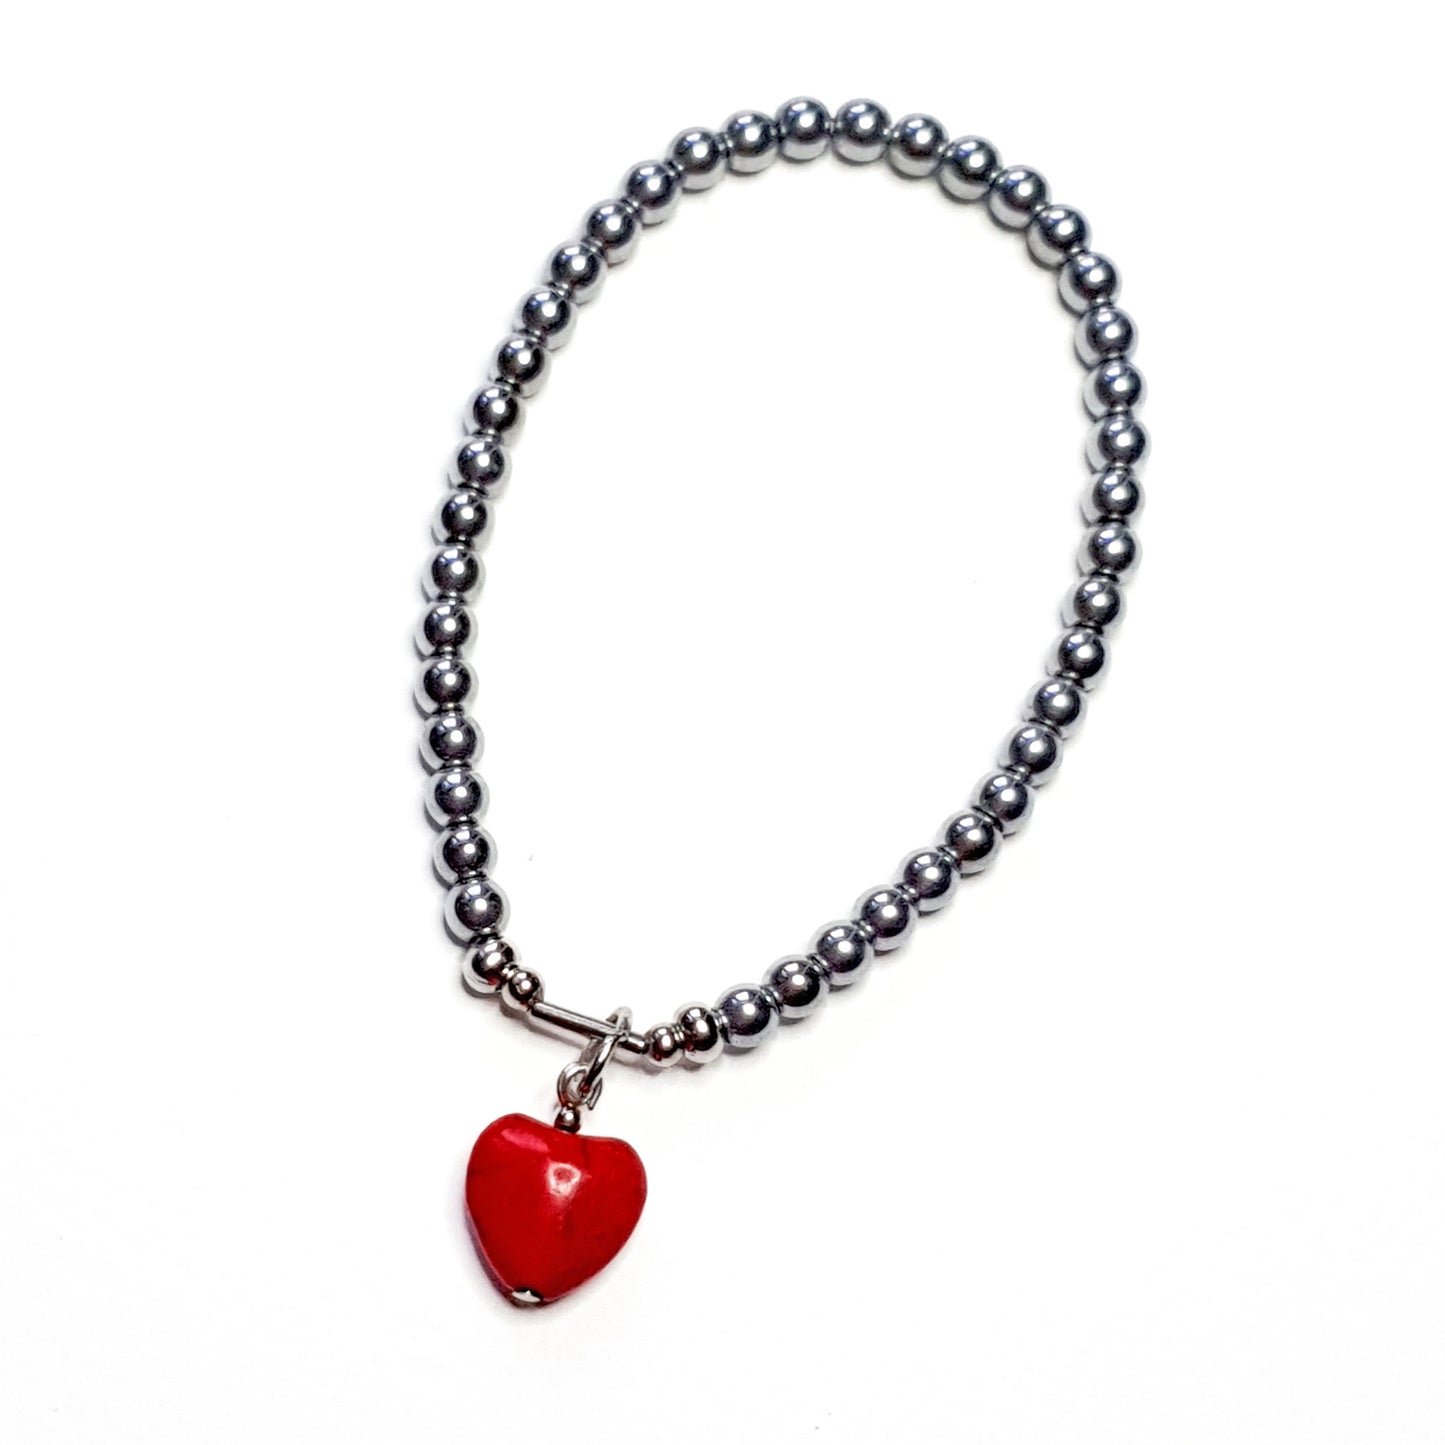 Red fossil heart charm bracelet